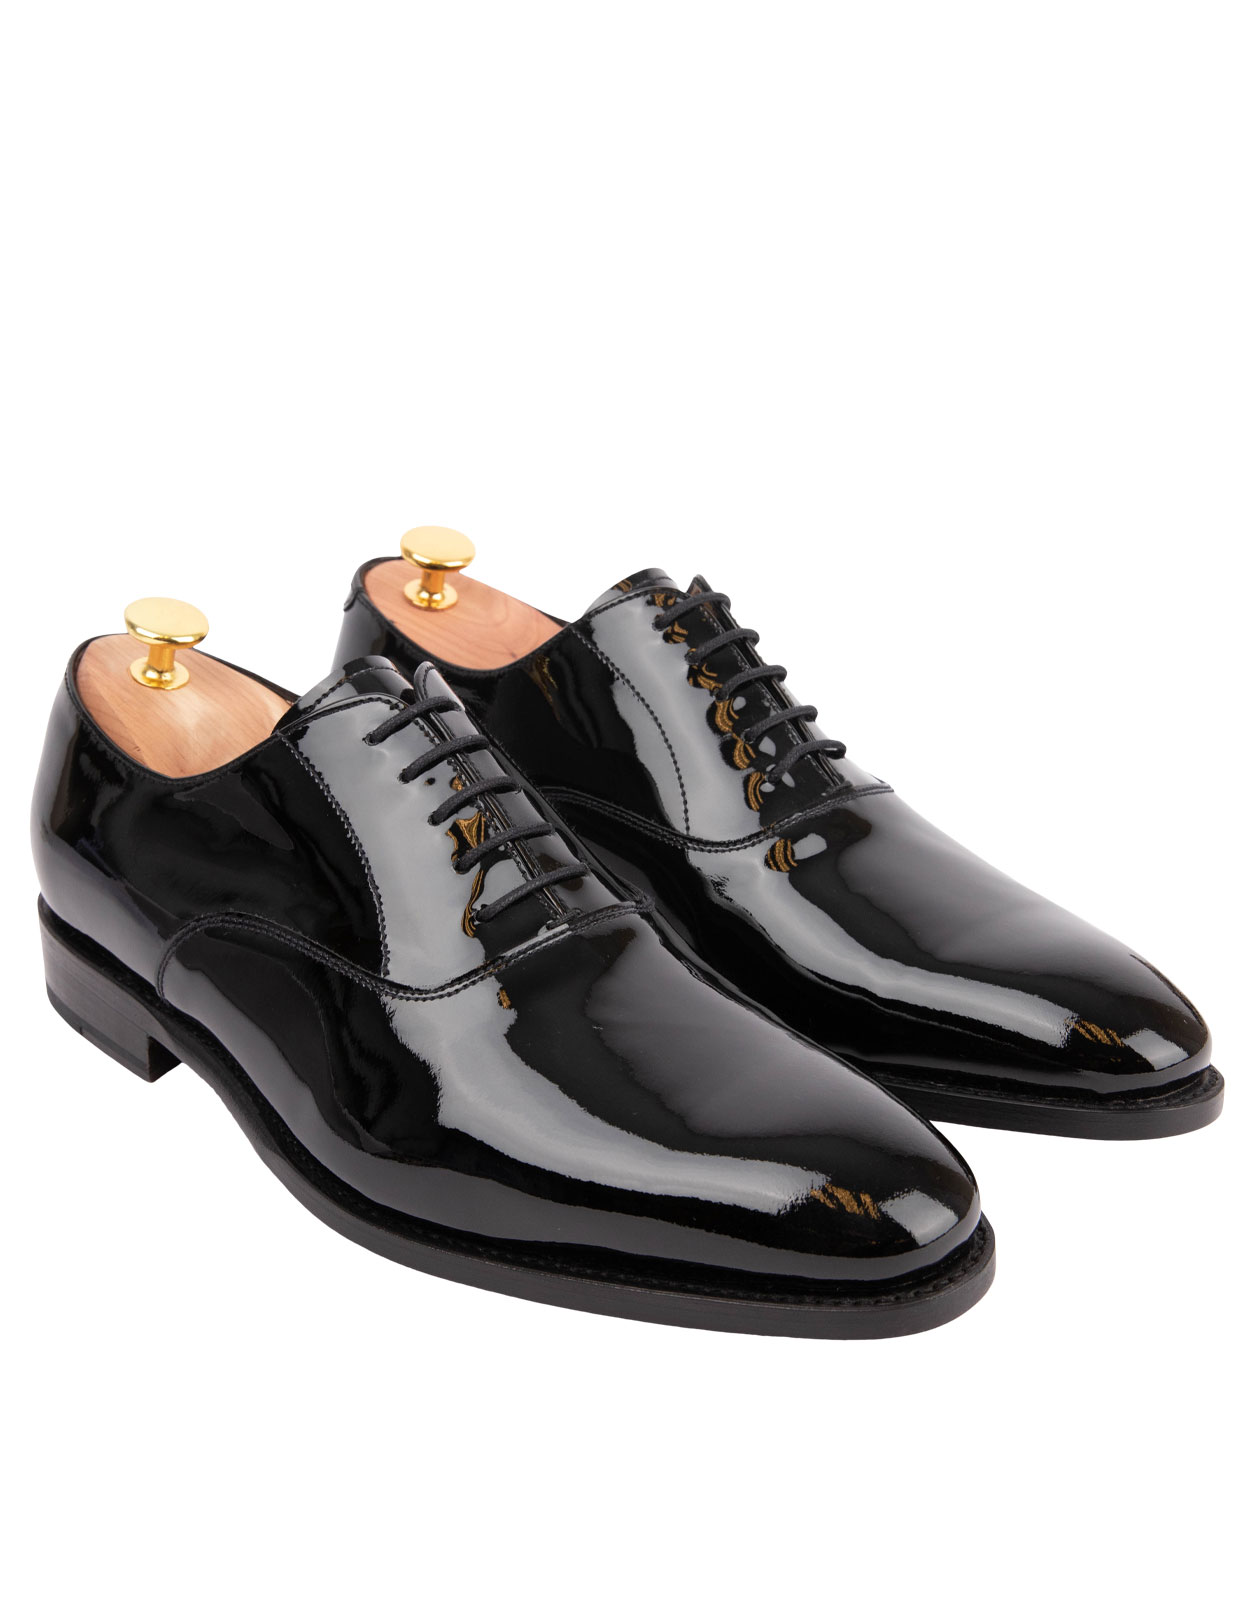 Patent Leather Oxford Shoe Black Stl 9